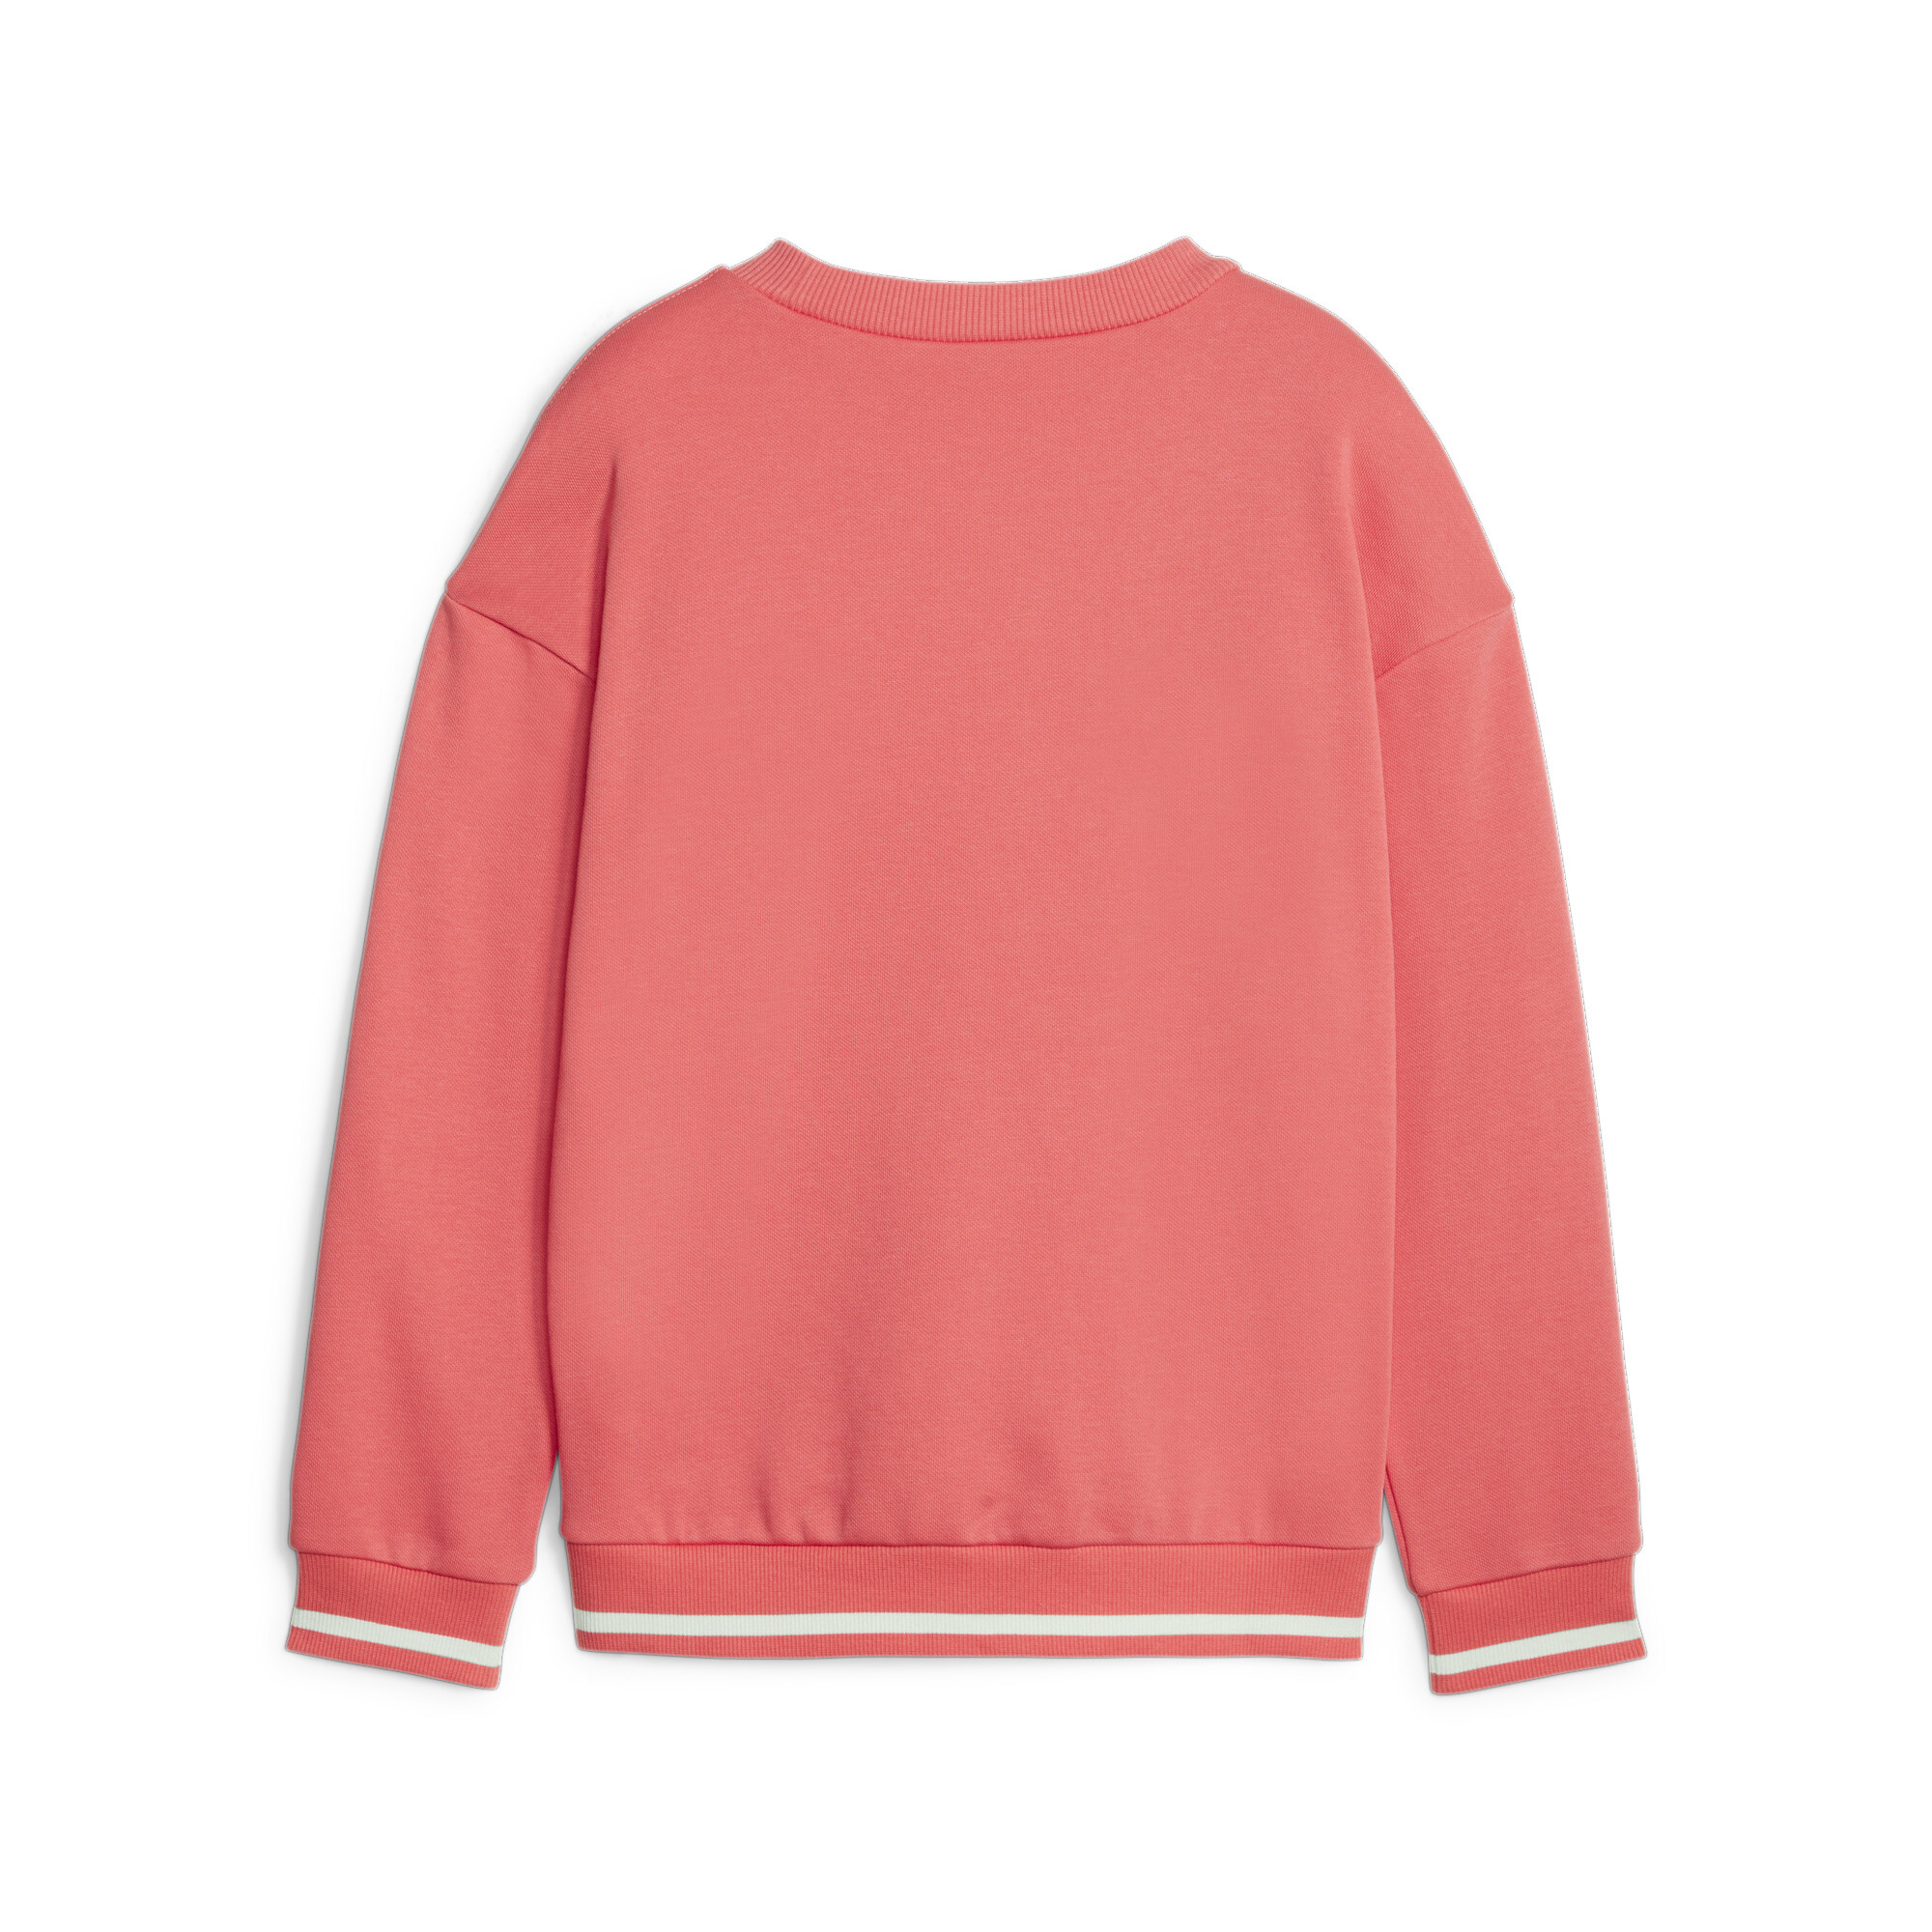 Women's Puma SQUAD Youth Sweatshirt, Pink, Size 13-14Y, Clothing